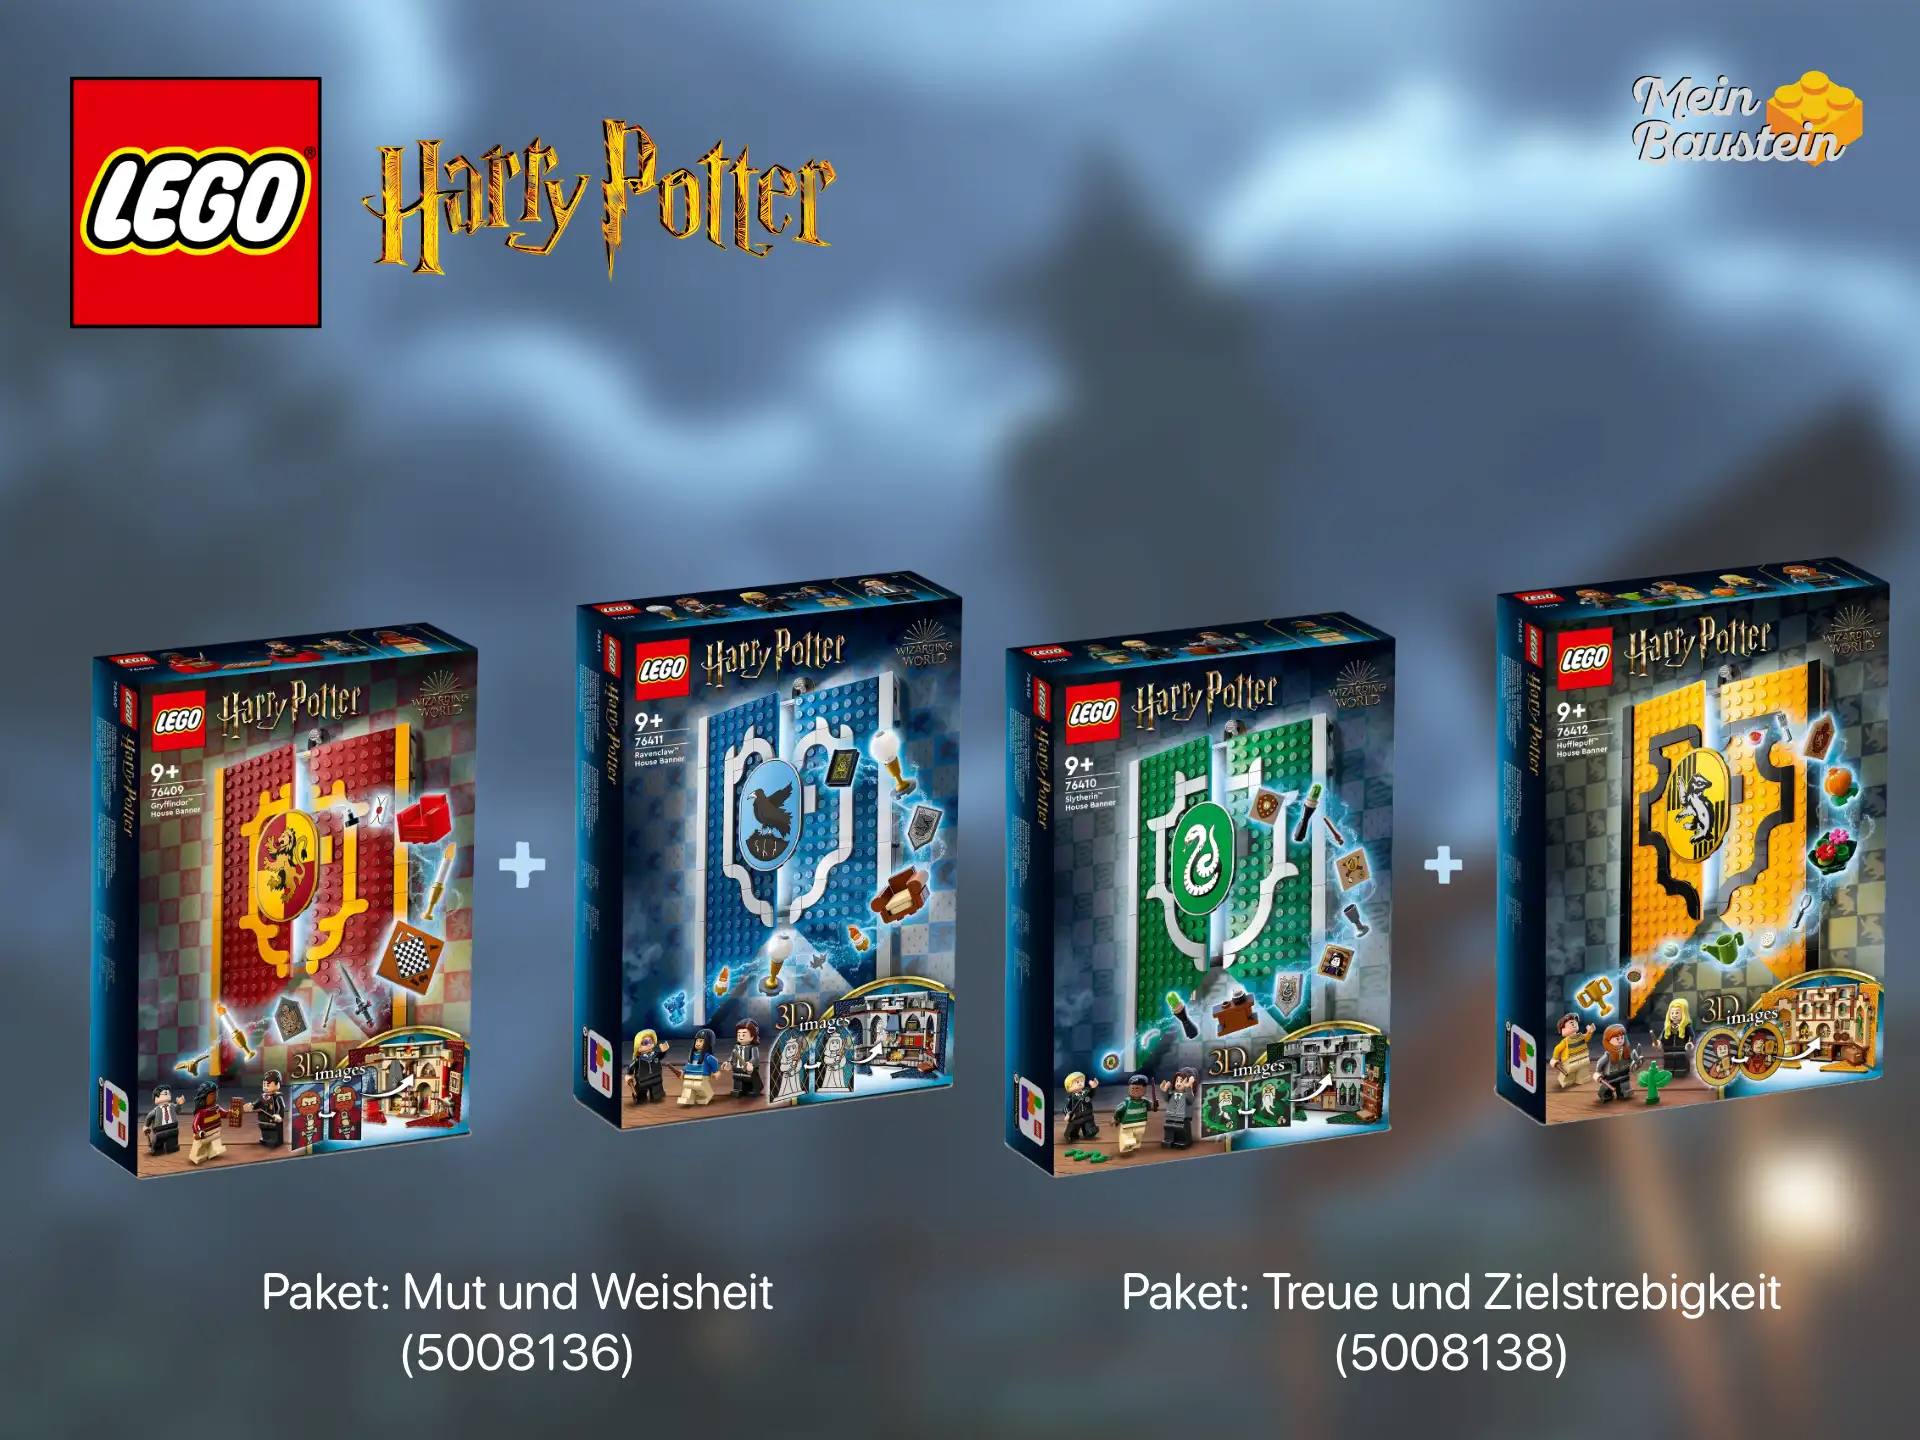 LEGO Harry Potter Hausbanner-Paket mit hohen Rabatten